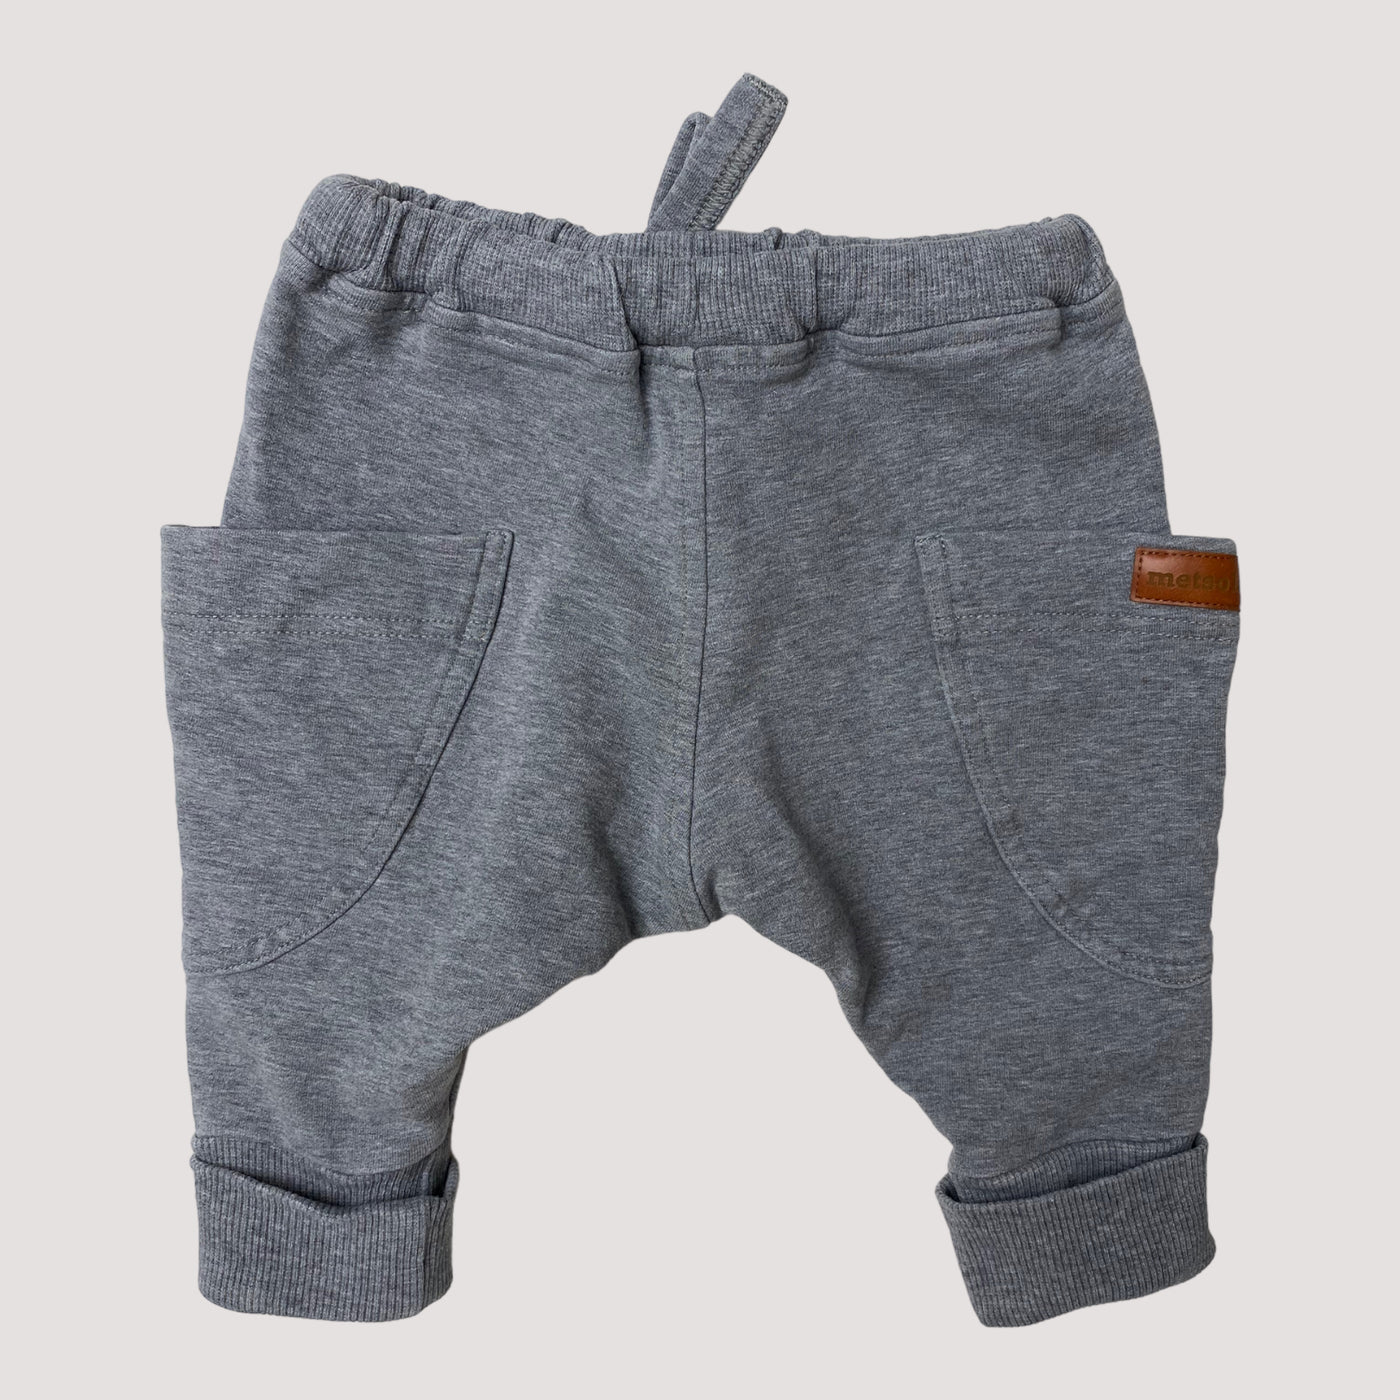 Metsola pocket sweatpants, grey | 56cm